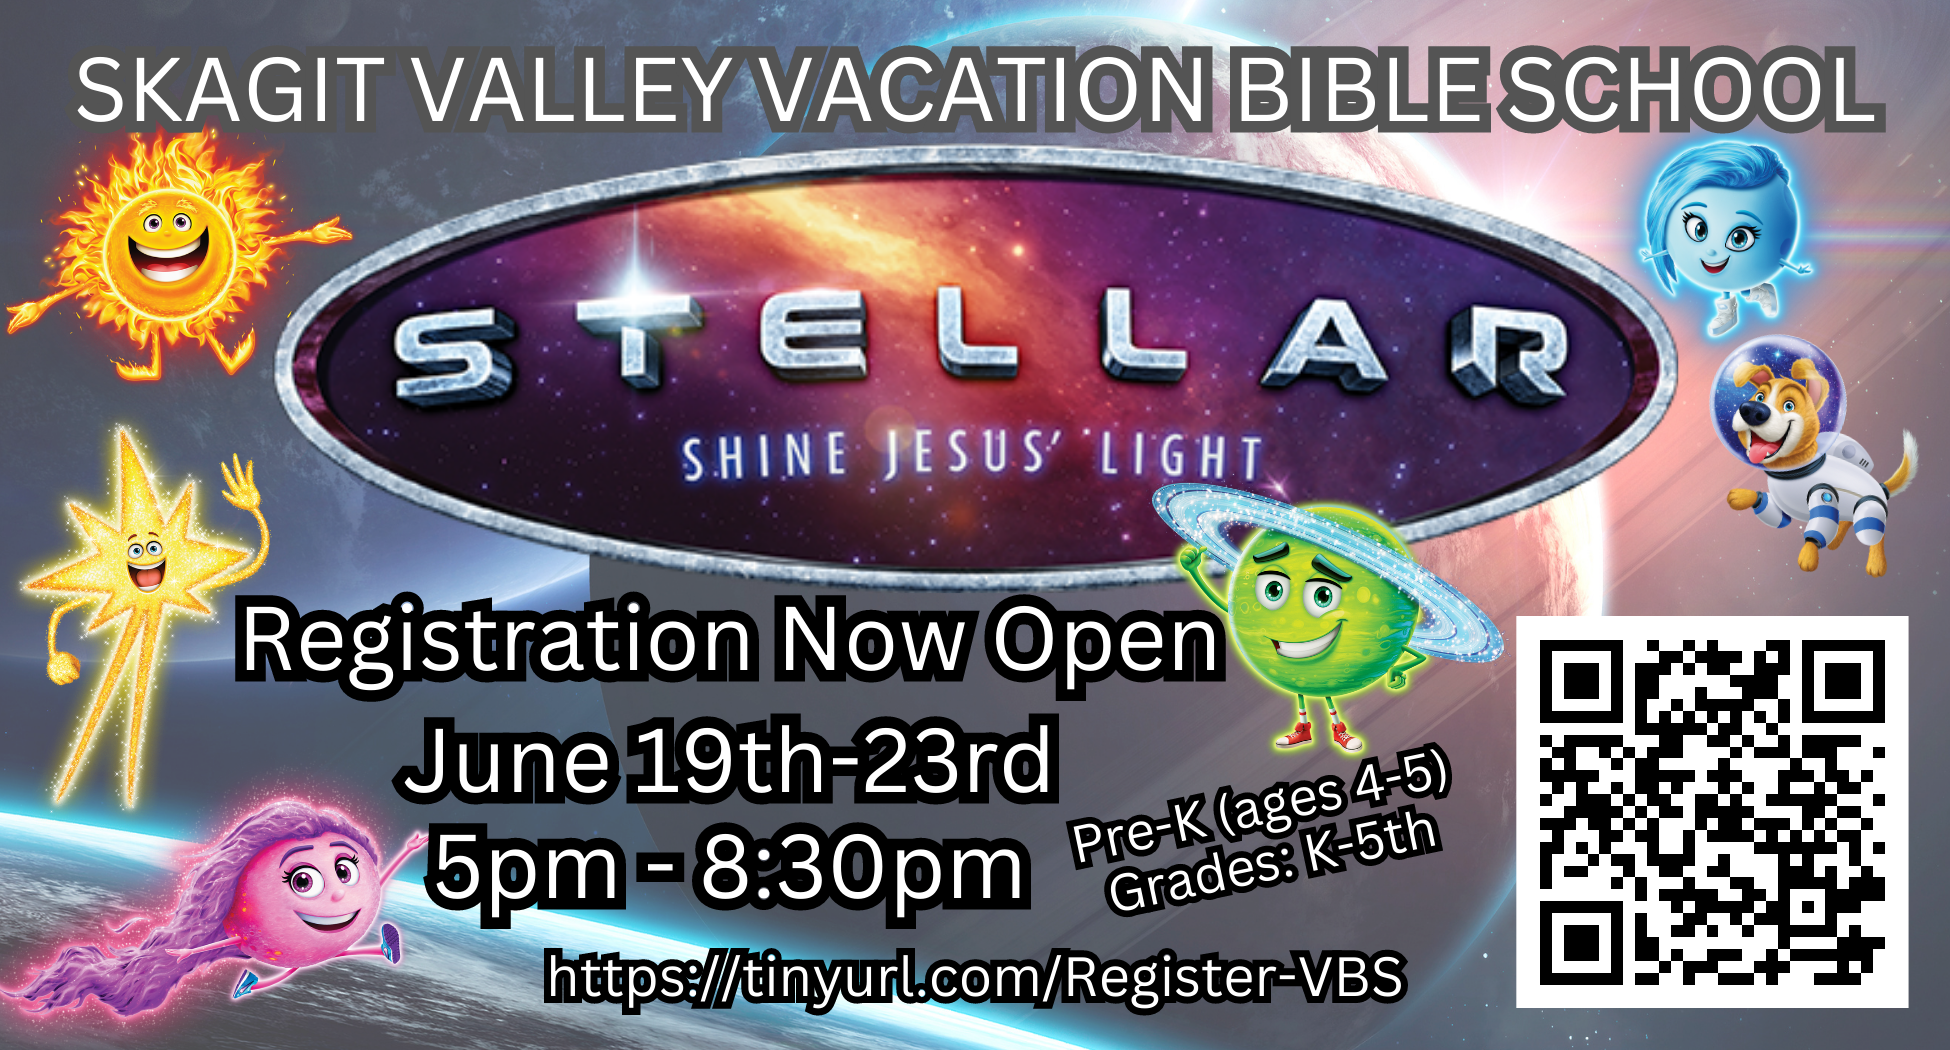 CTK Skagit Vacation Bible School